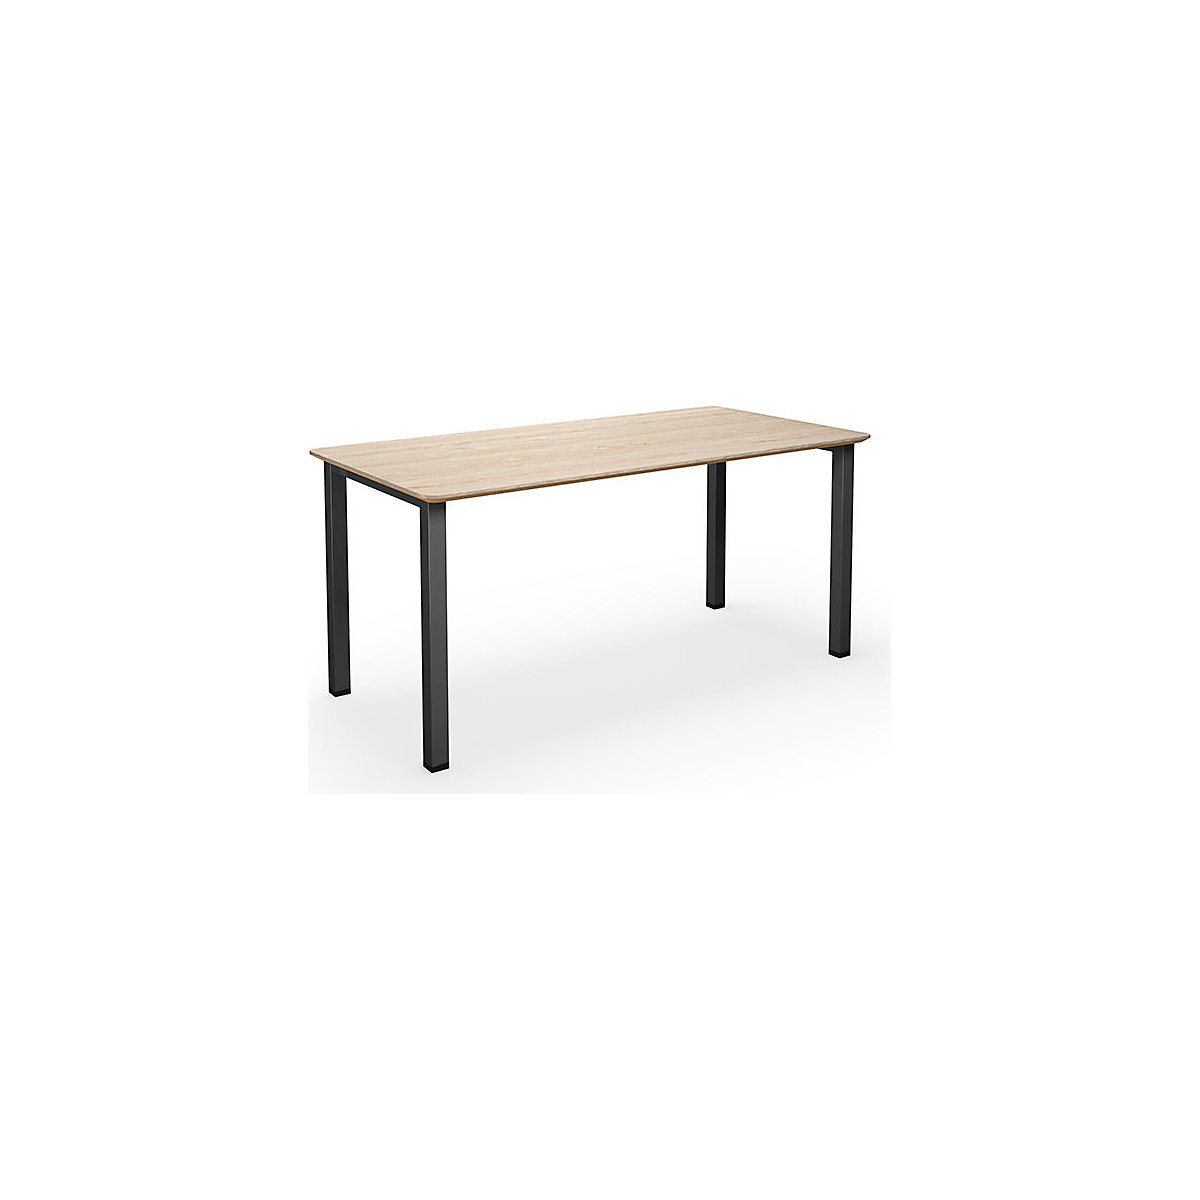 DUO-U Trend multi-purpose desk, straight tabletop, rounded corners, WxD 1600 x 800 mm, oak, black-3